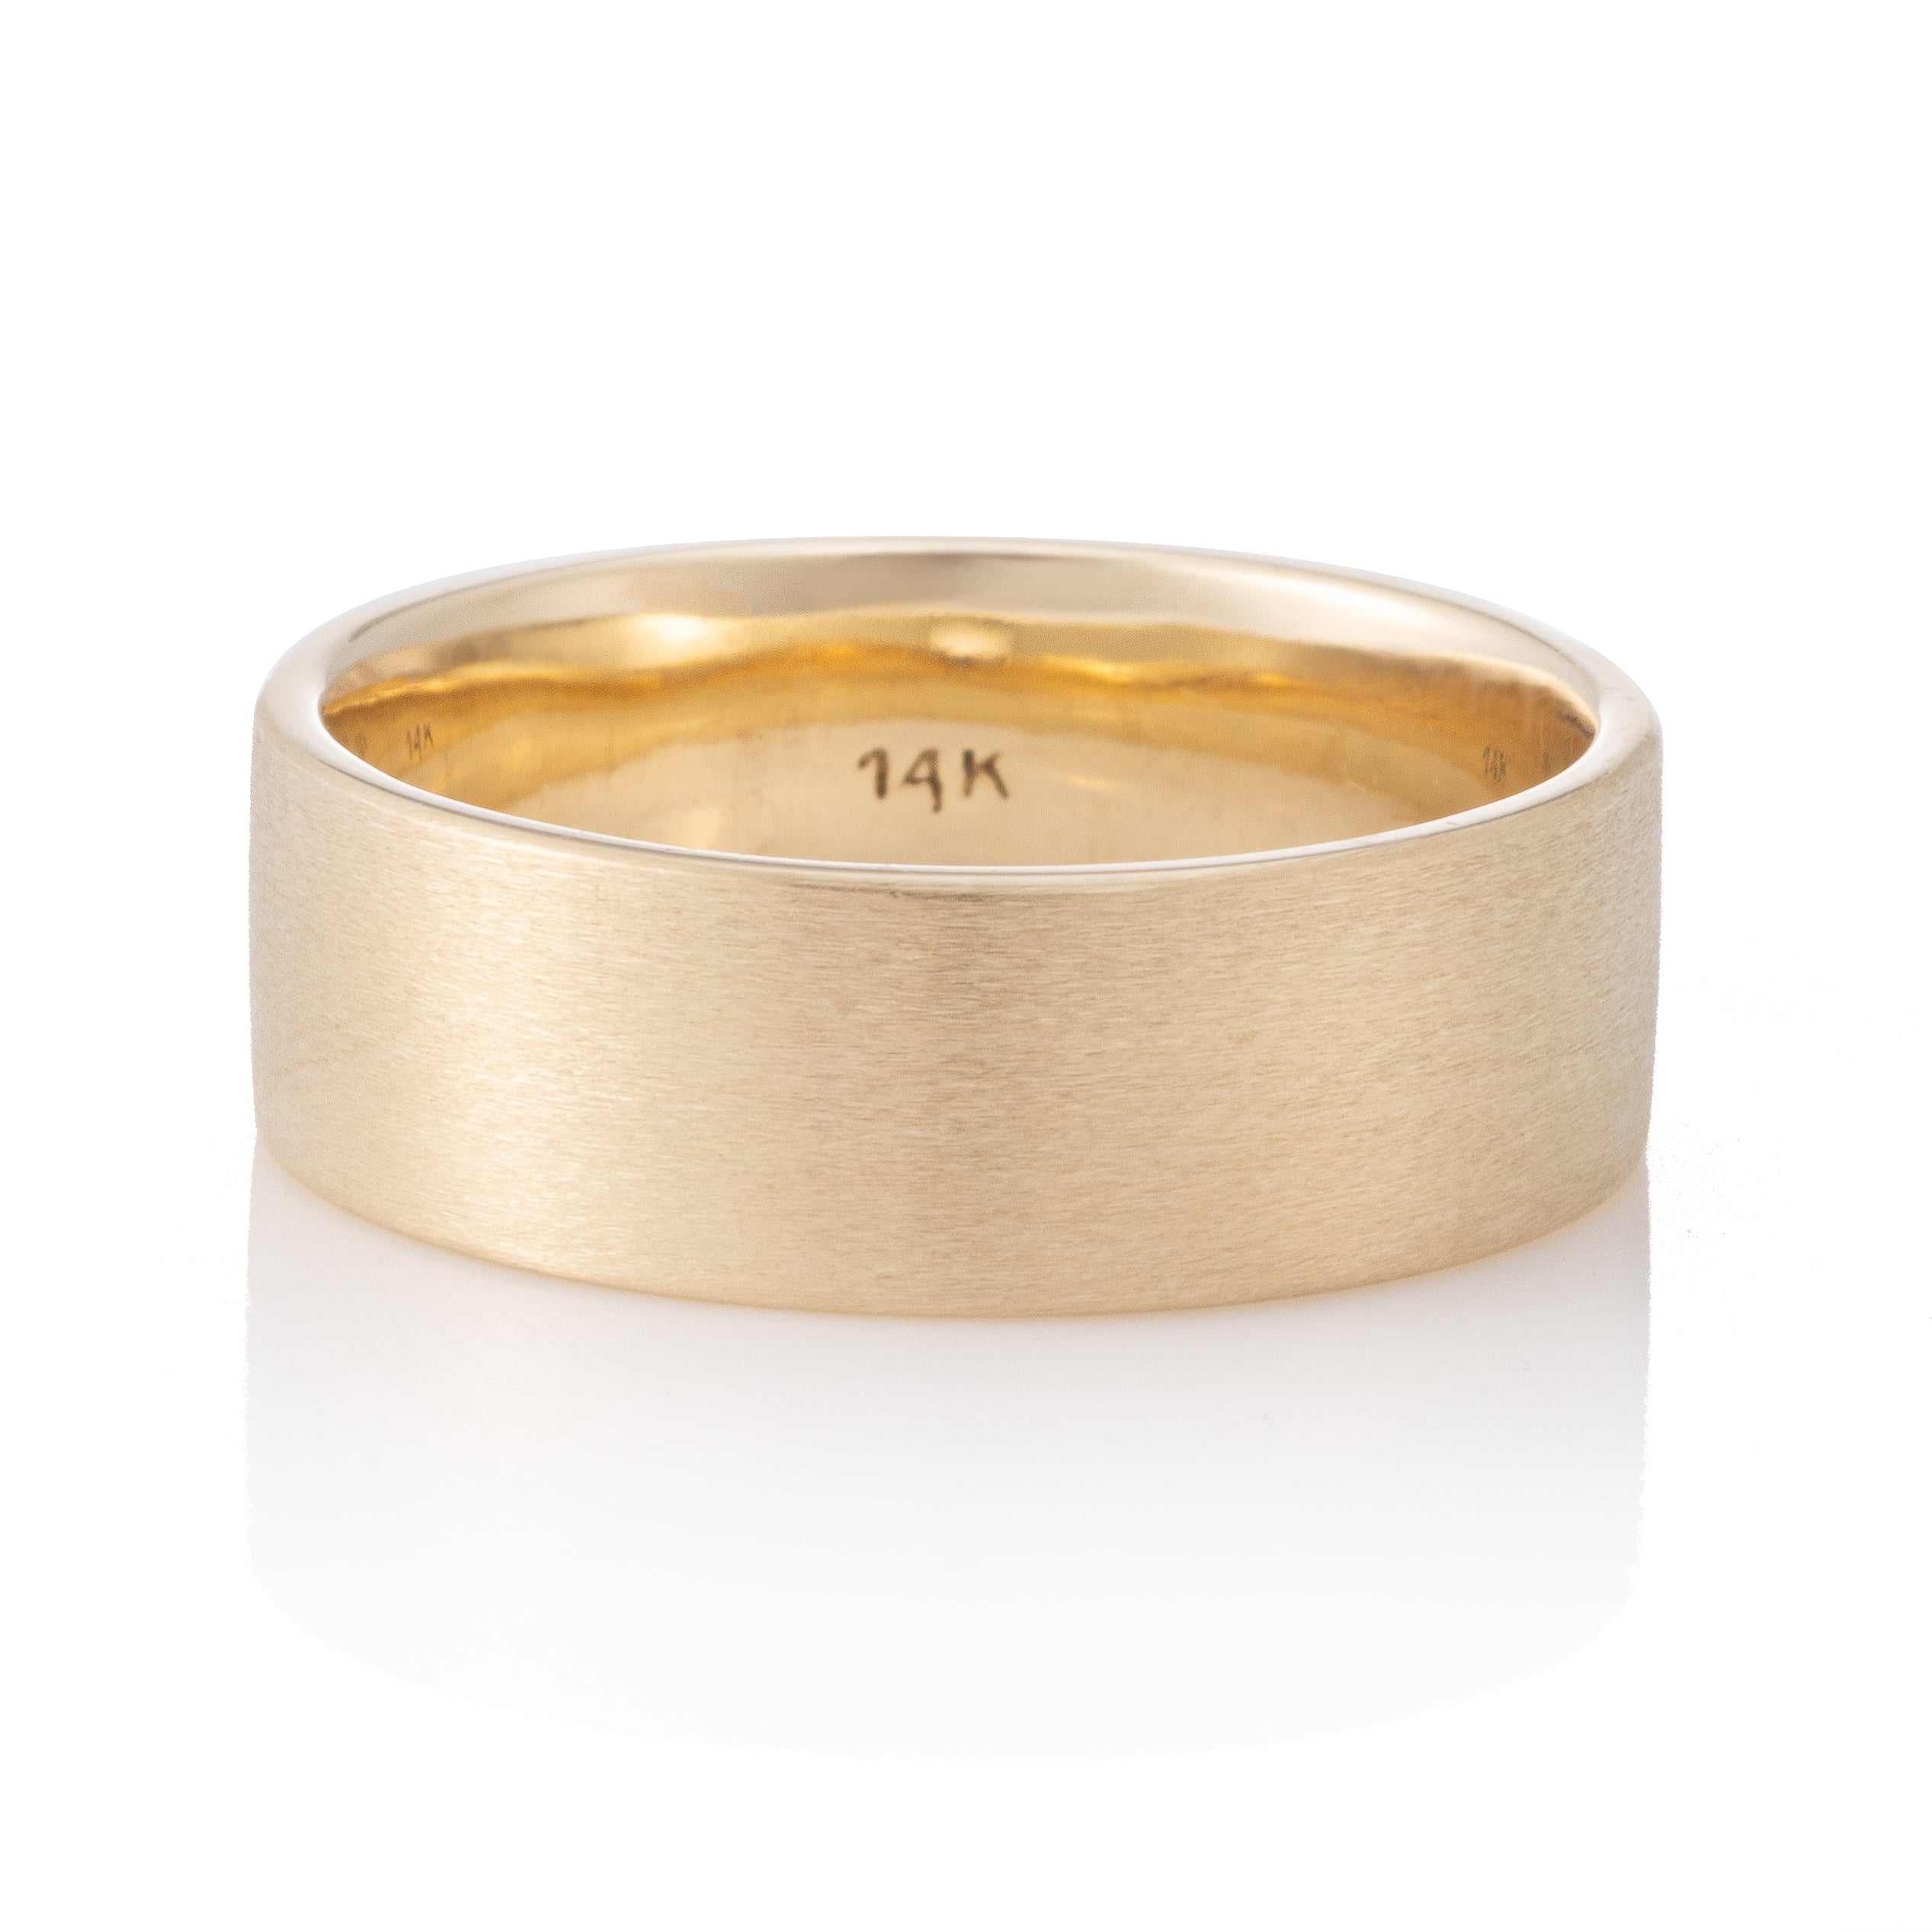 Buy Ring Designs Online At Best Prices | CaratLane